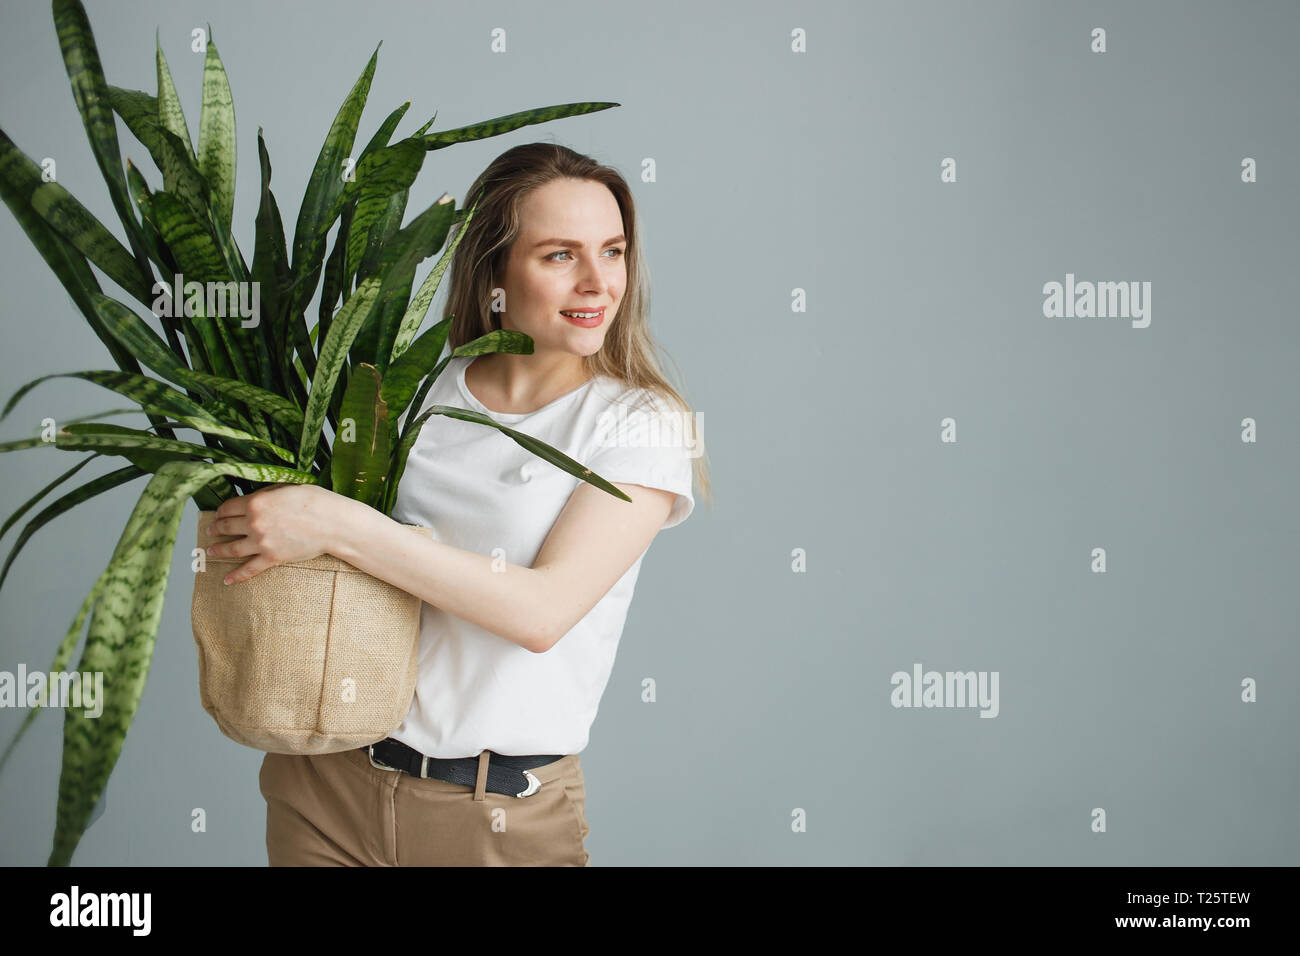 Belle jeune femme holding potted plant Sansevieria and smiling at camera isolé sur fond gris. Banque D'Images